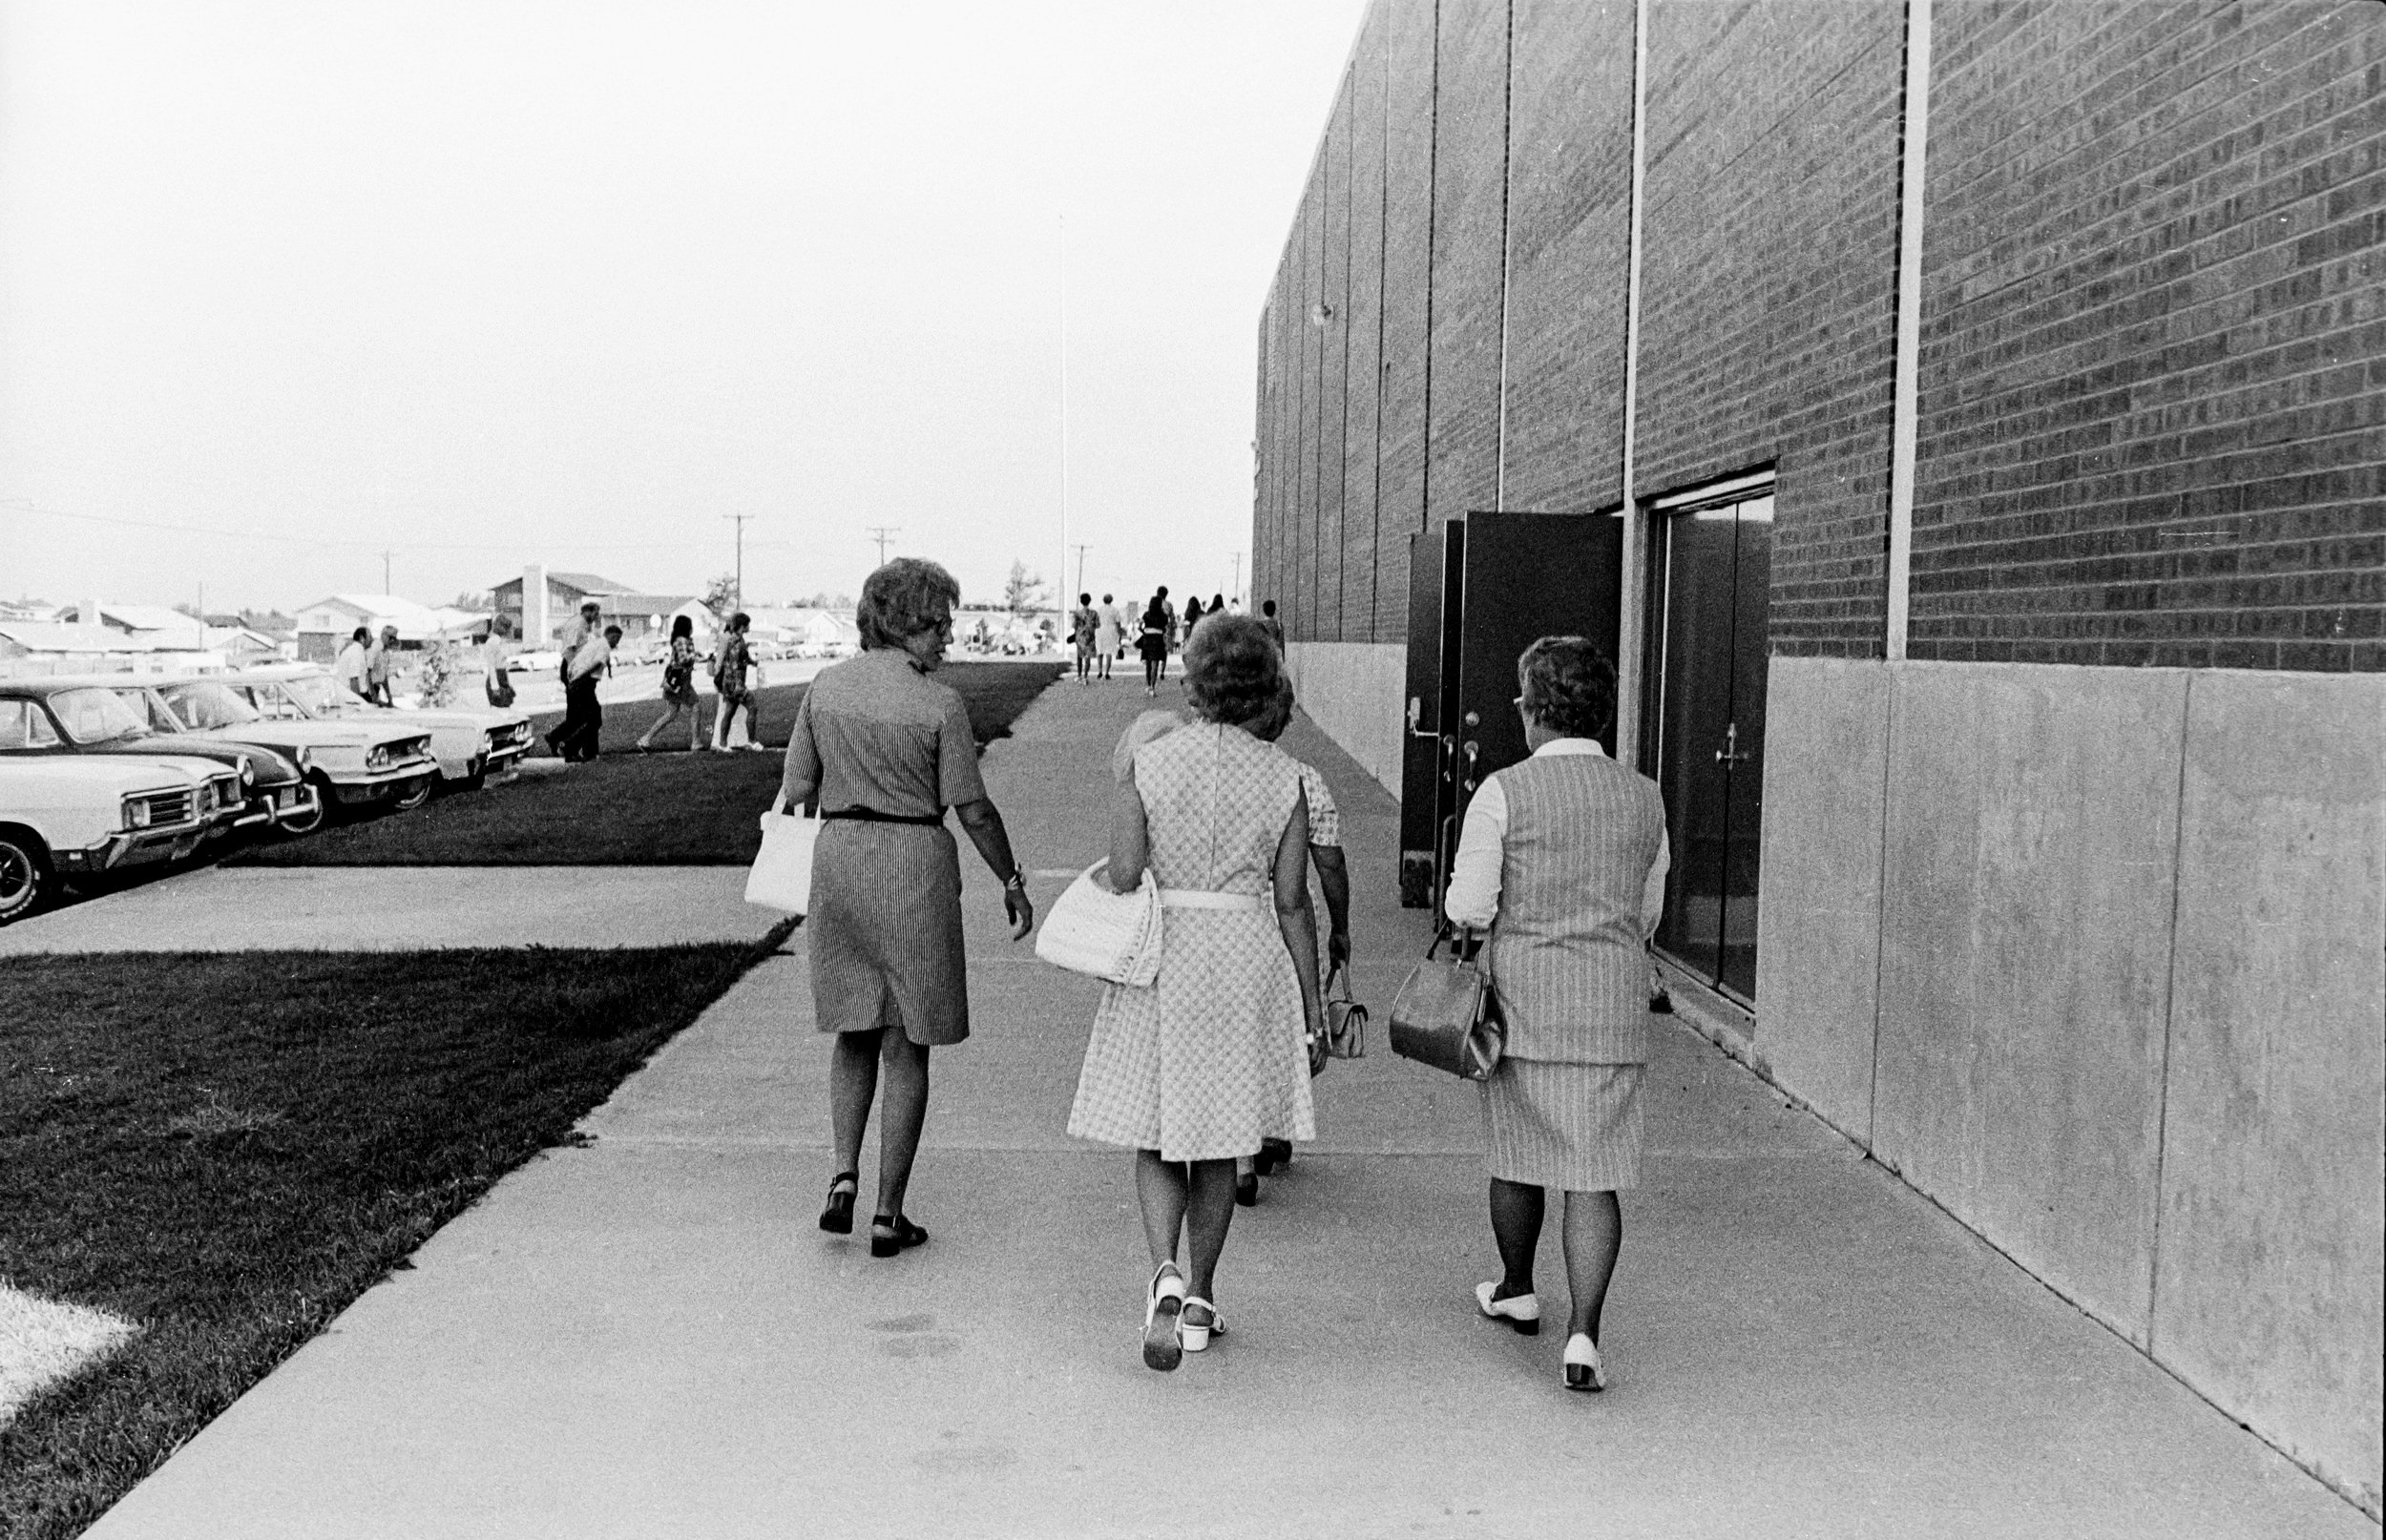   First Day of School, Aurora, CO, 1972  